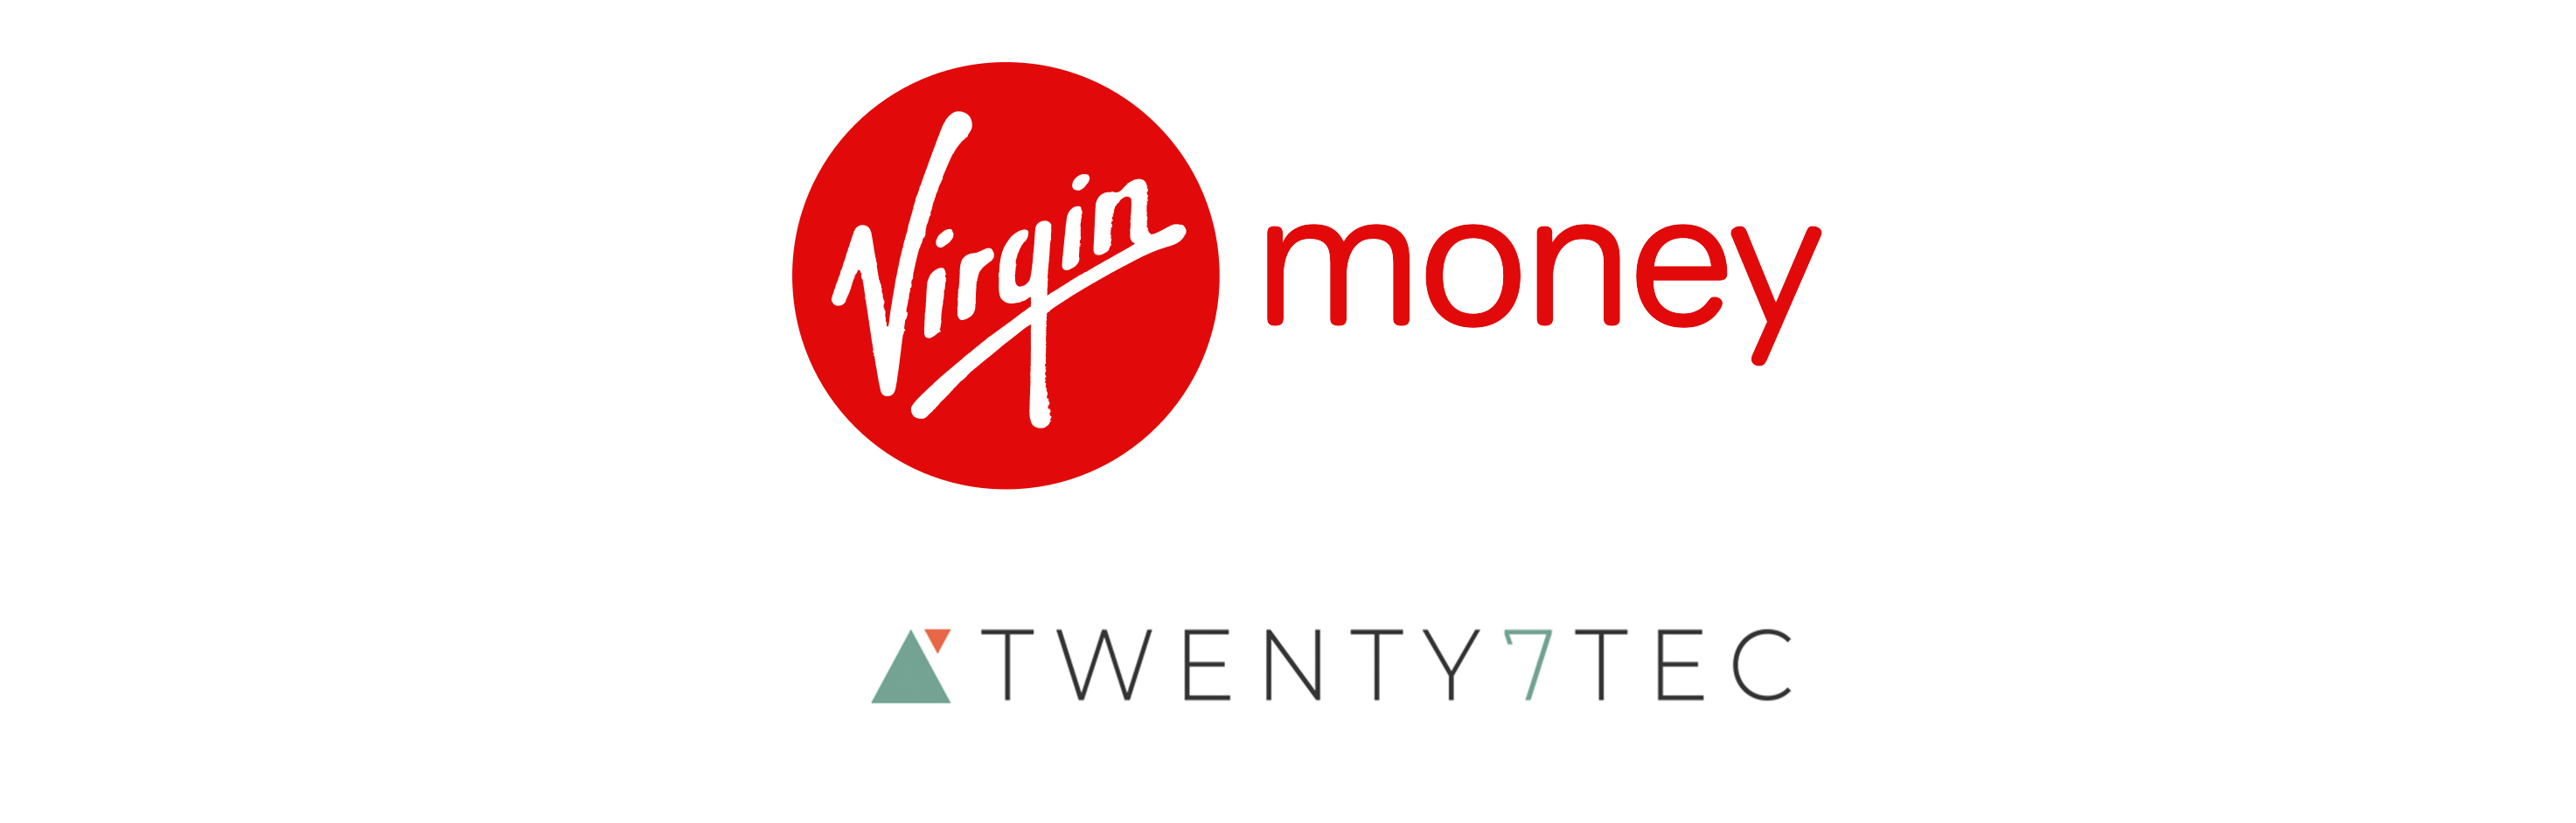 Virgin Money Launches Innovative Partnership With Twenty7Tec